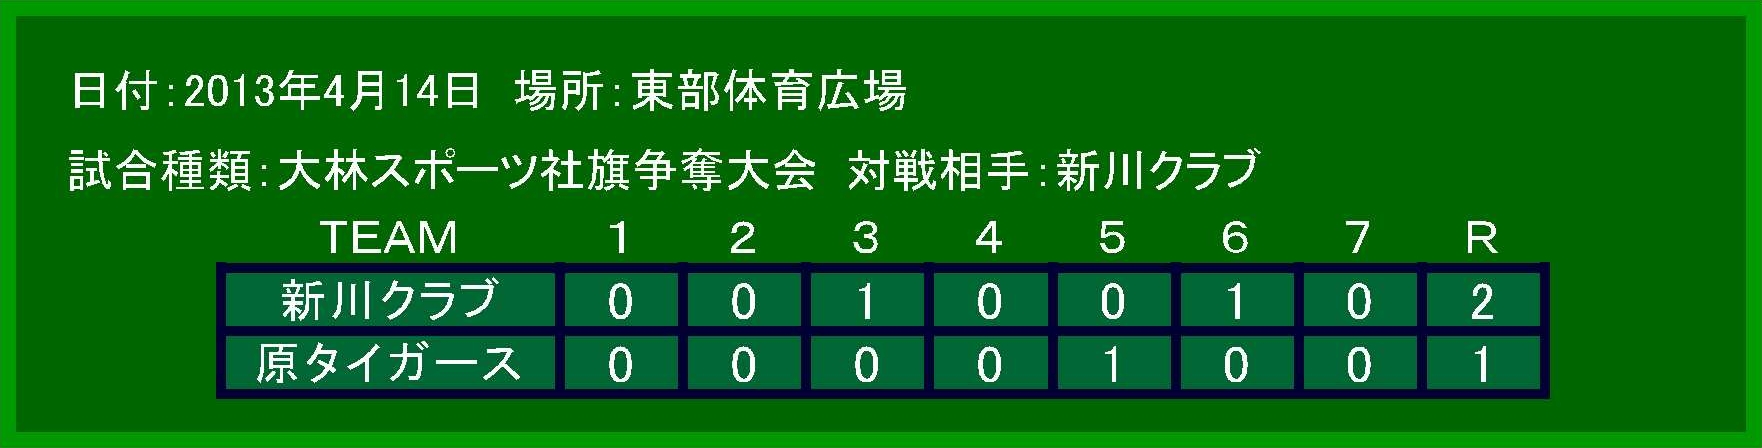 score_vsshinkawa_obayashi-1